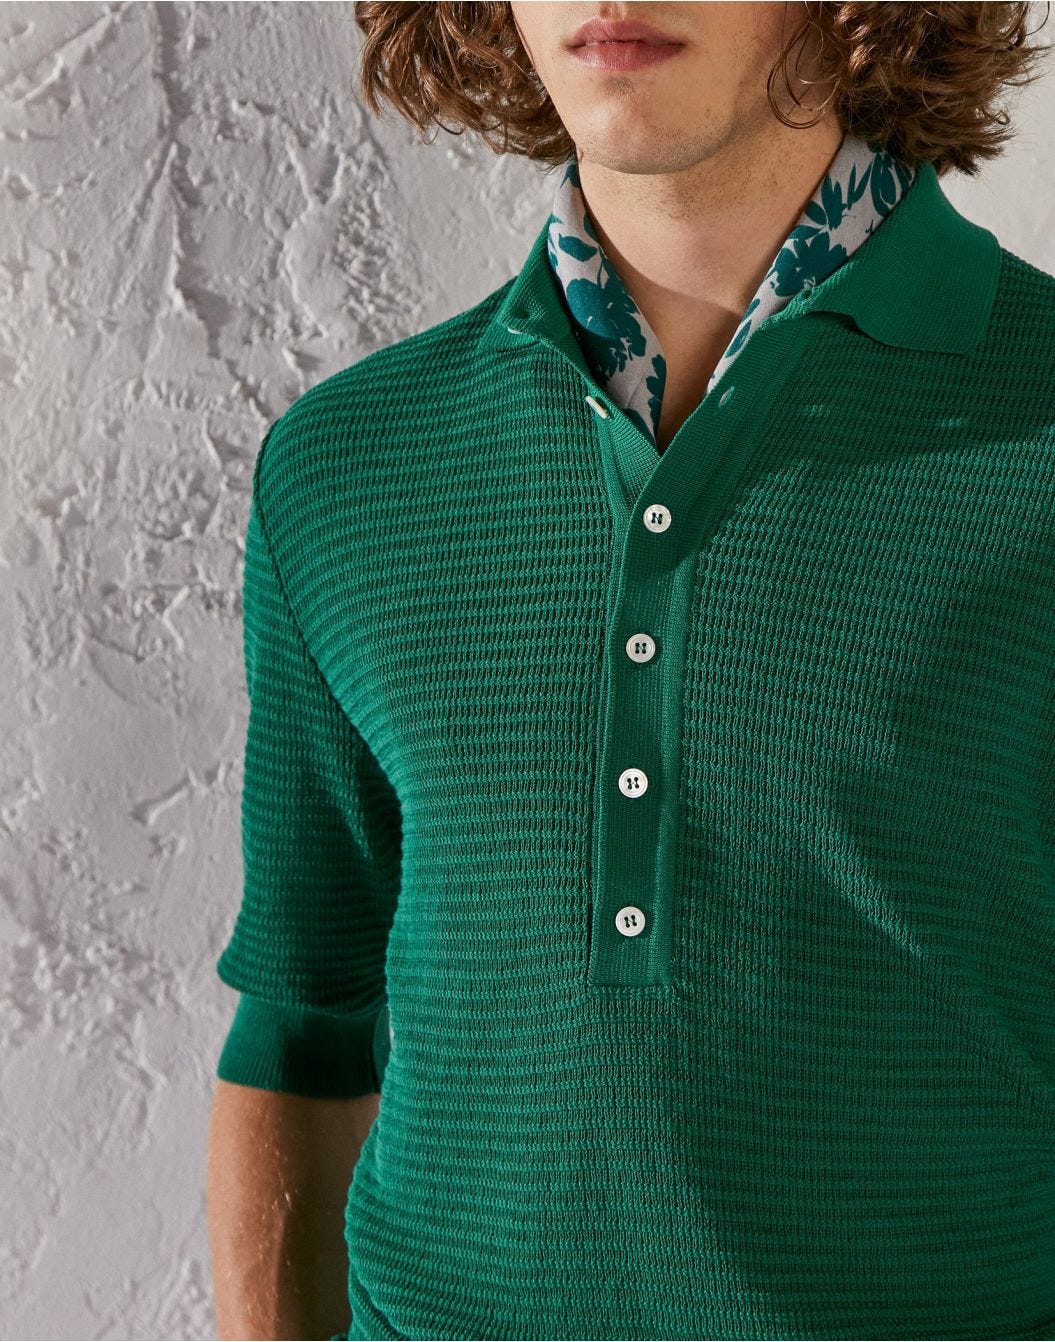 Green compact cotton polo shirt - Luigi Lardini capsule